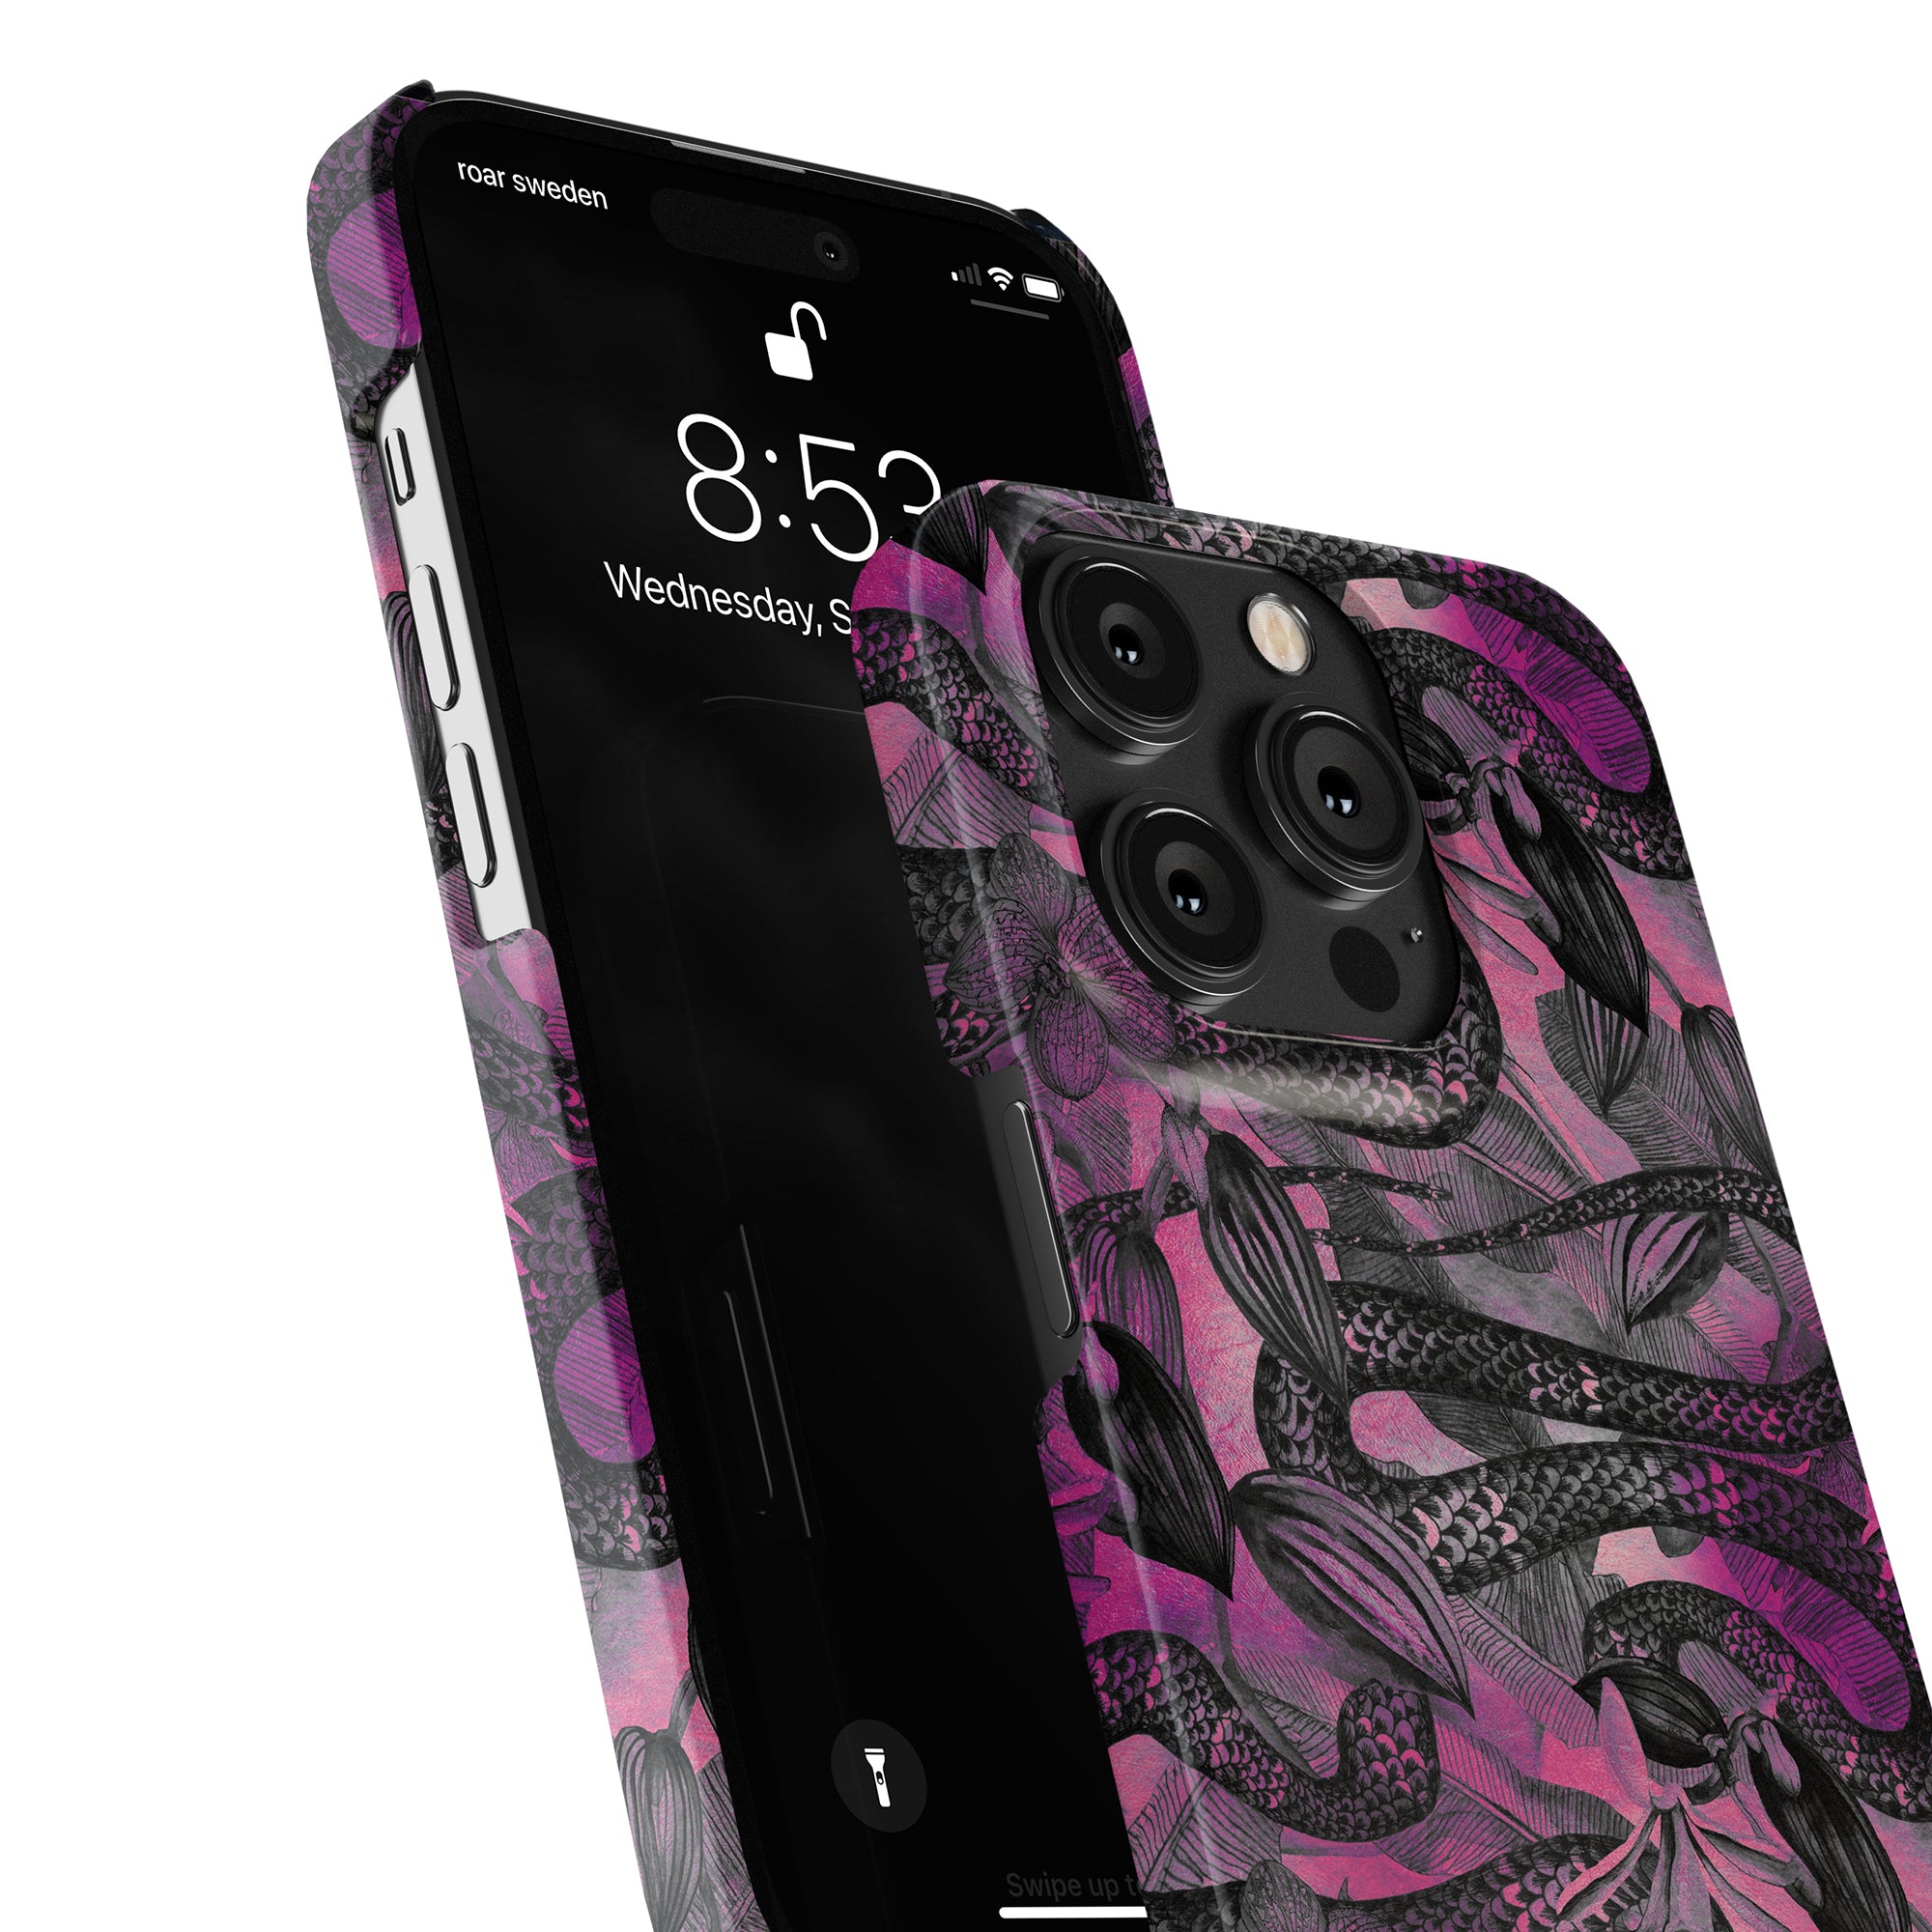 A Snake Nest - Slim case with a stylish purple and black pattern.